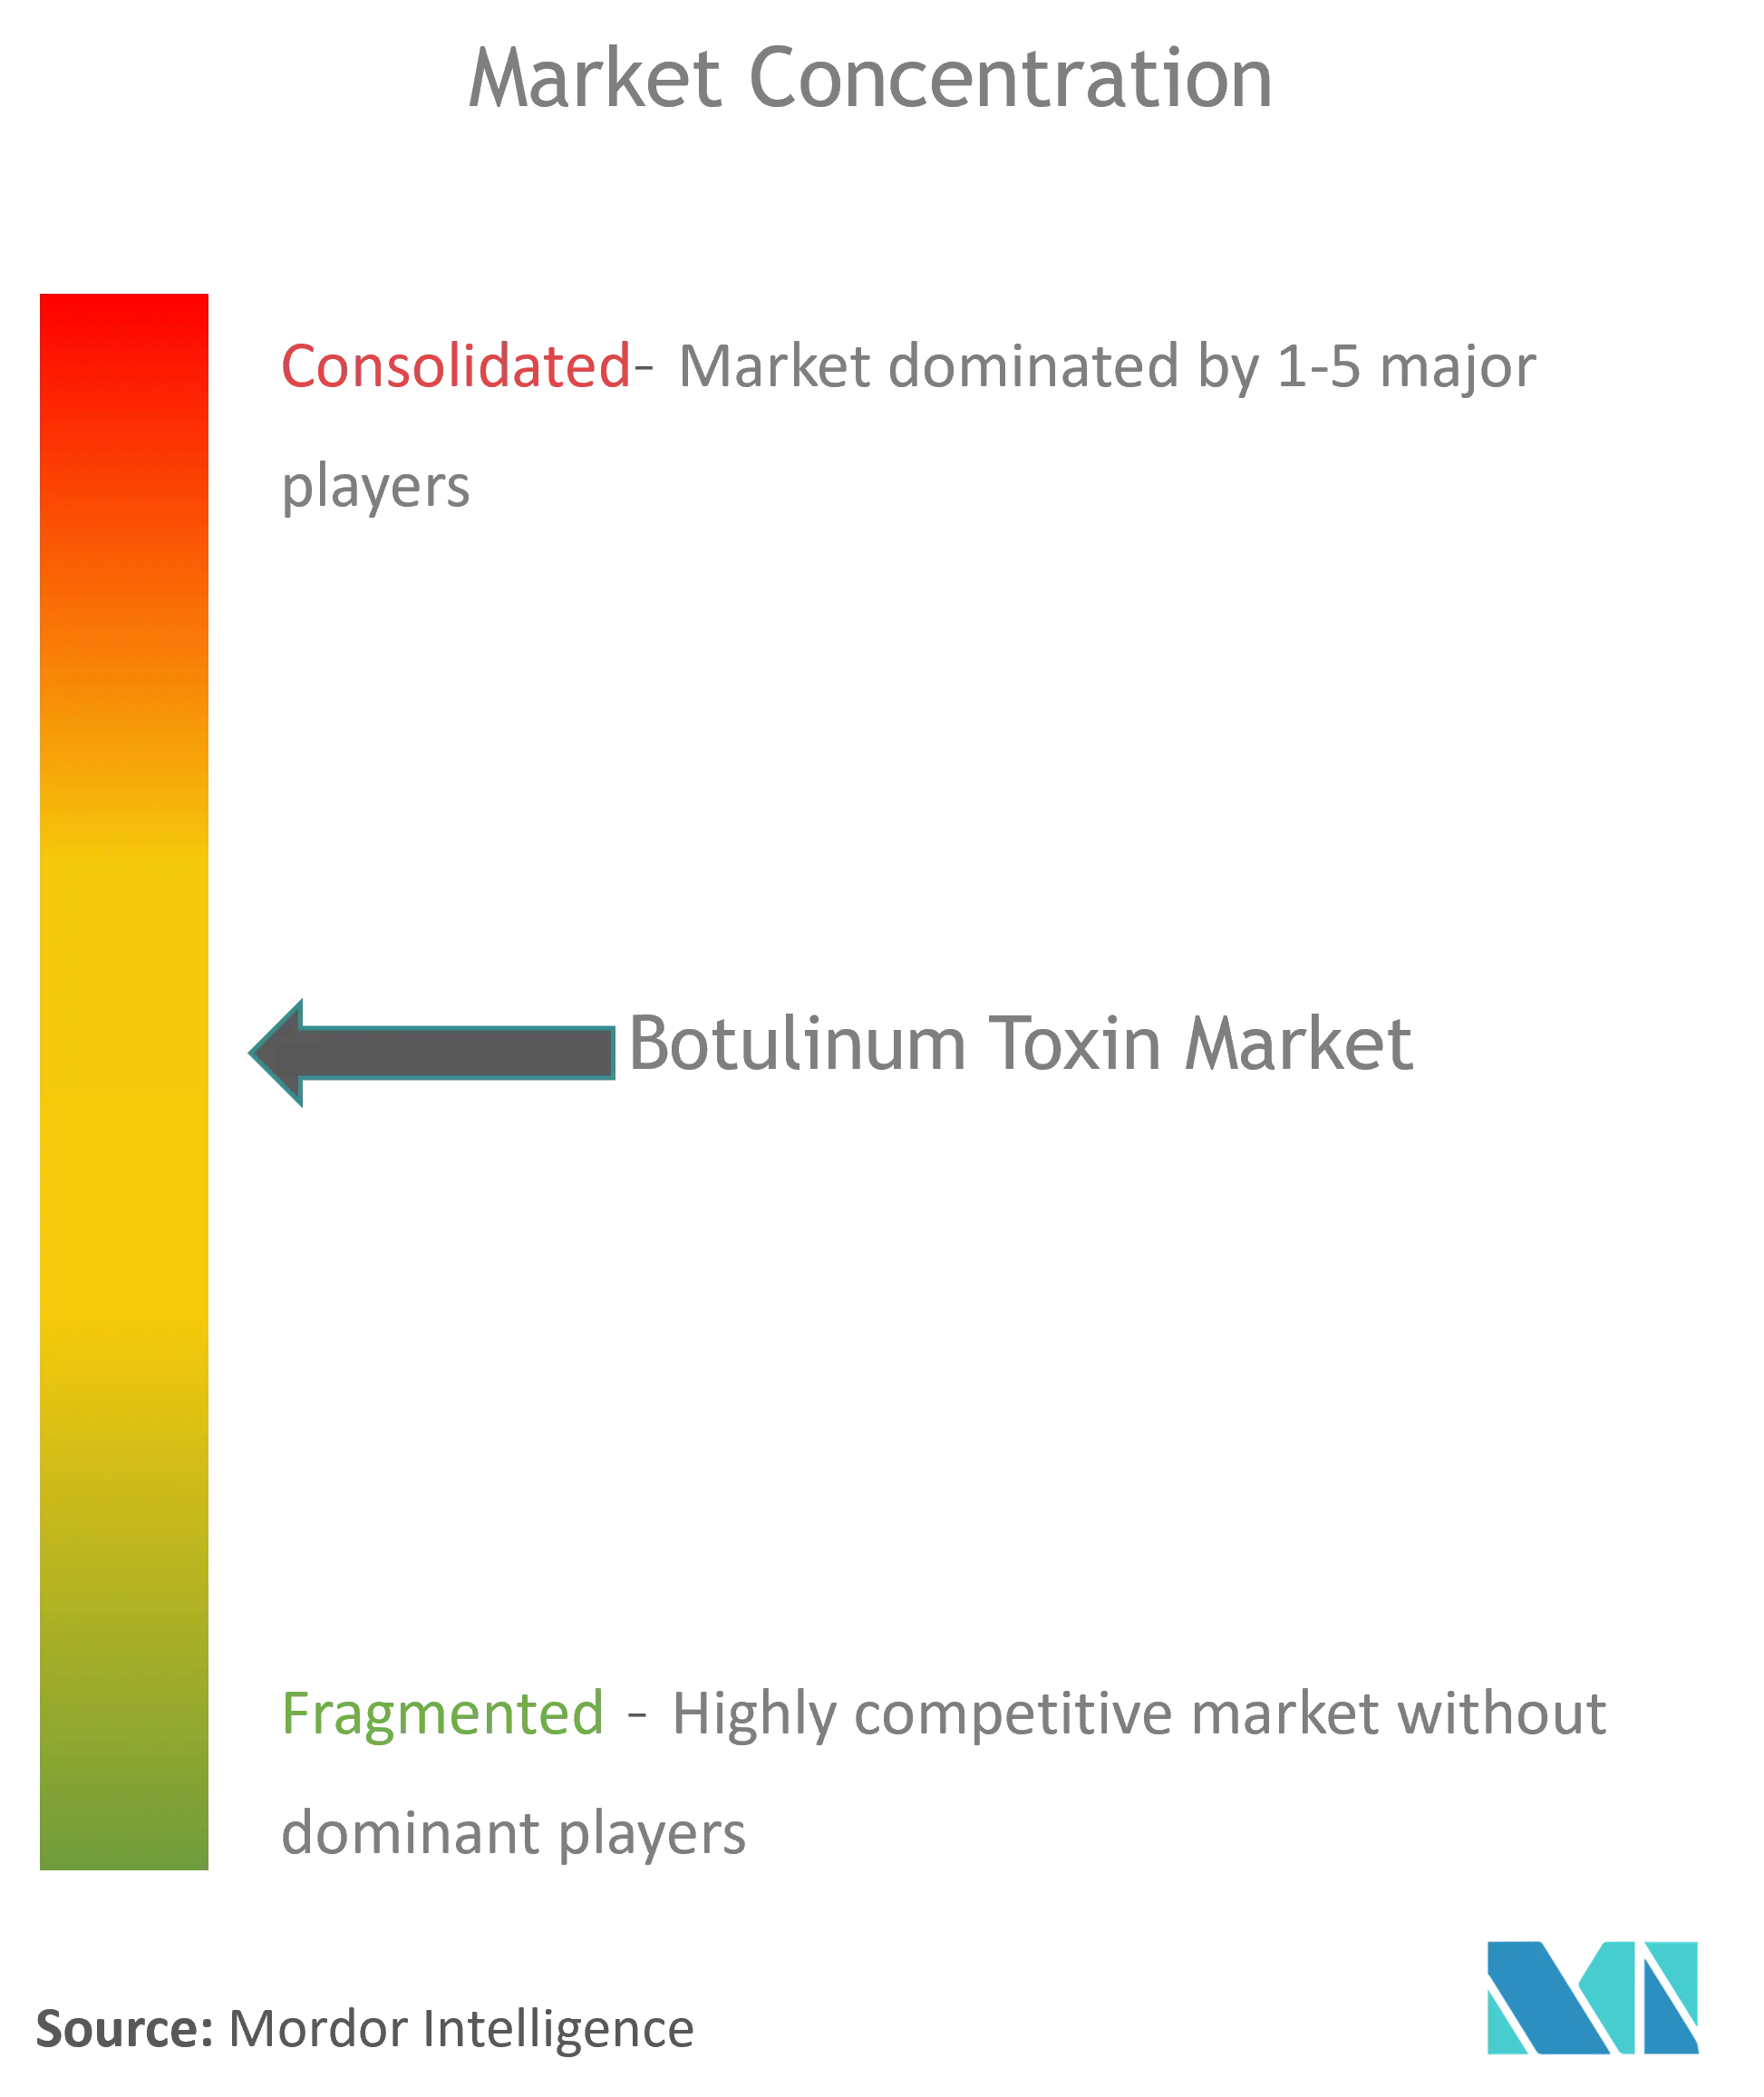 Botulinum Toxin Market Concentration